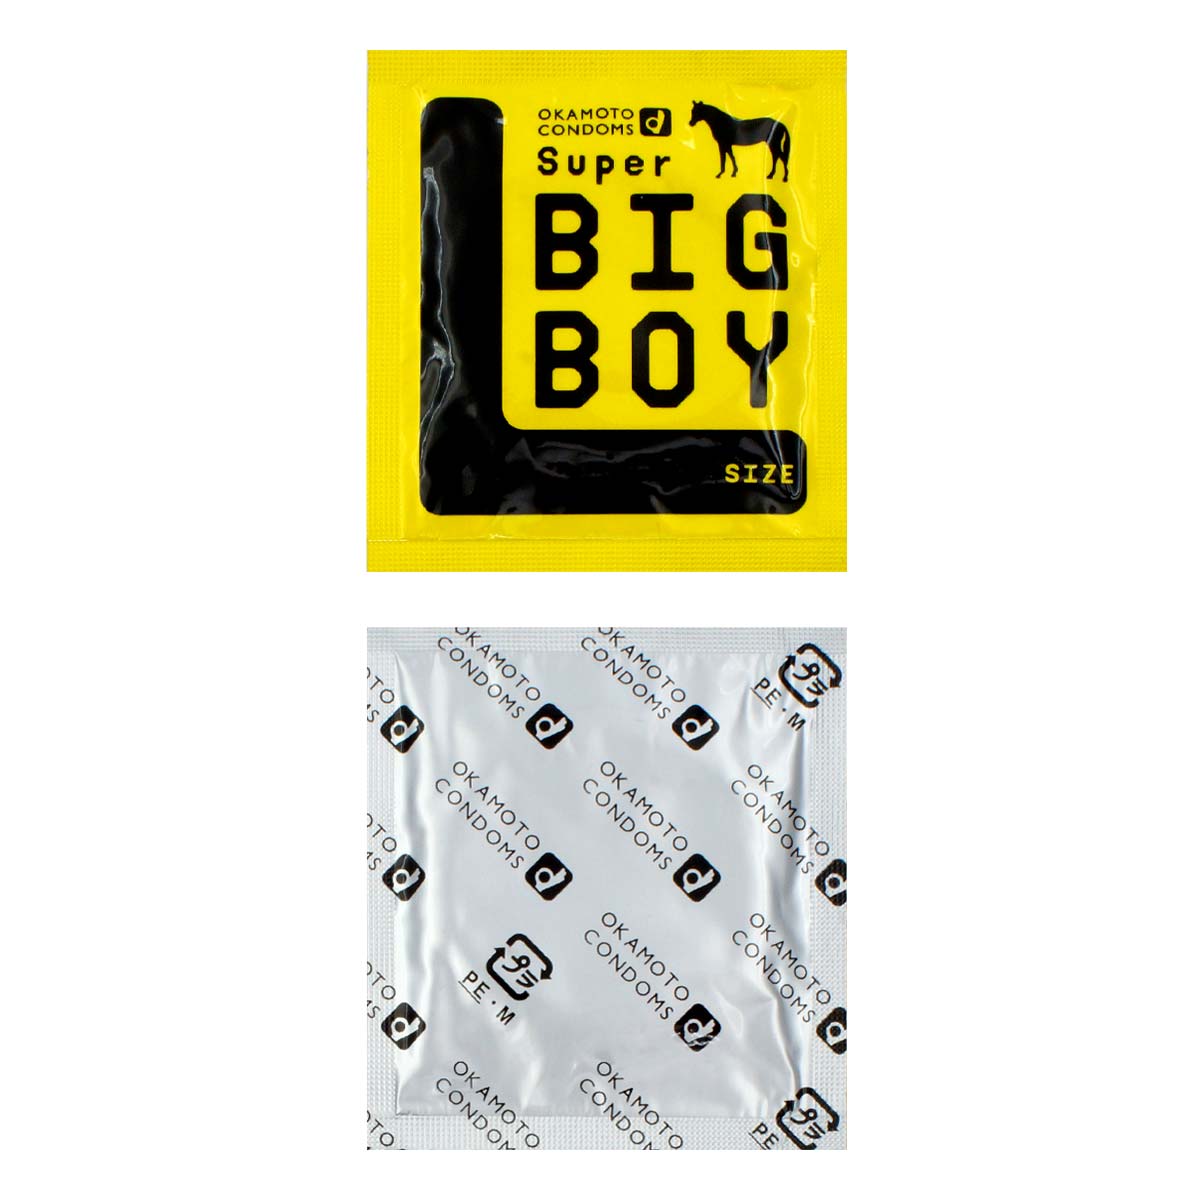 Super Big Boy 58mm (Japan Edition) 2 pieces Latex Condom-p_2